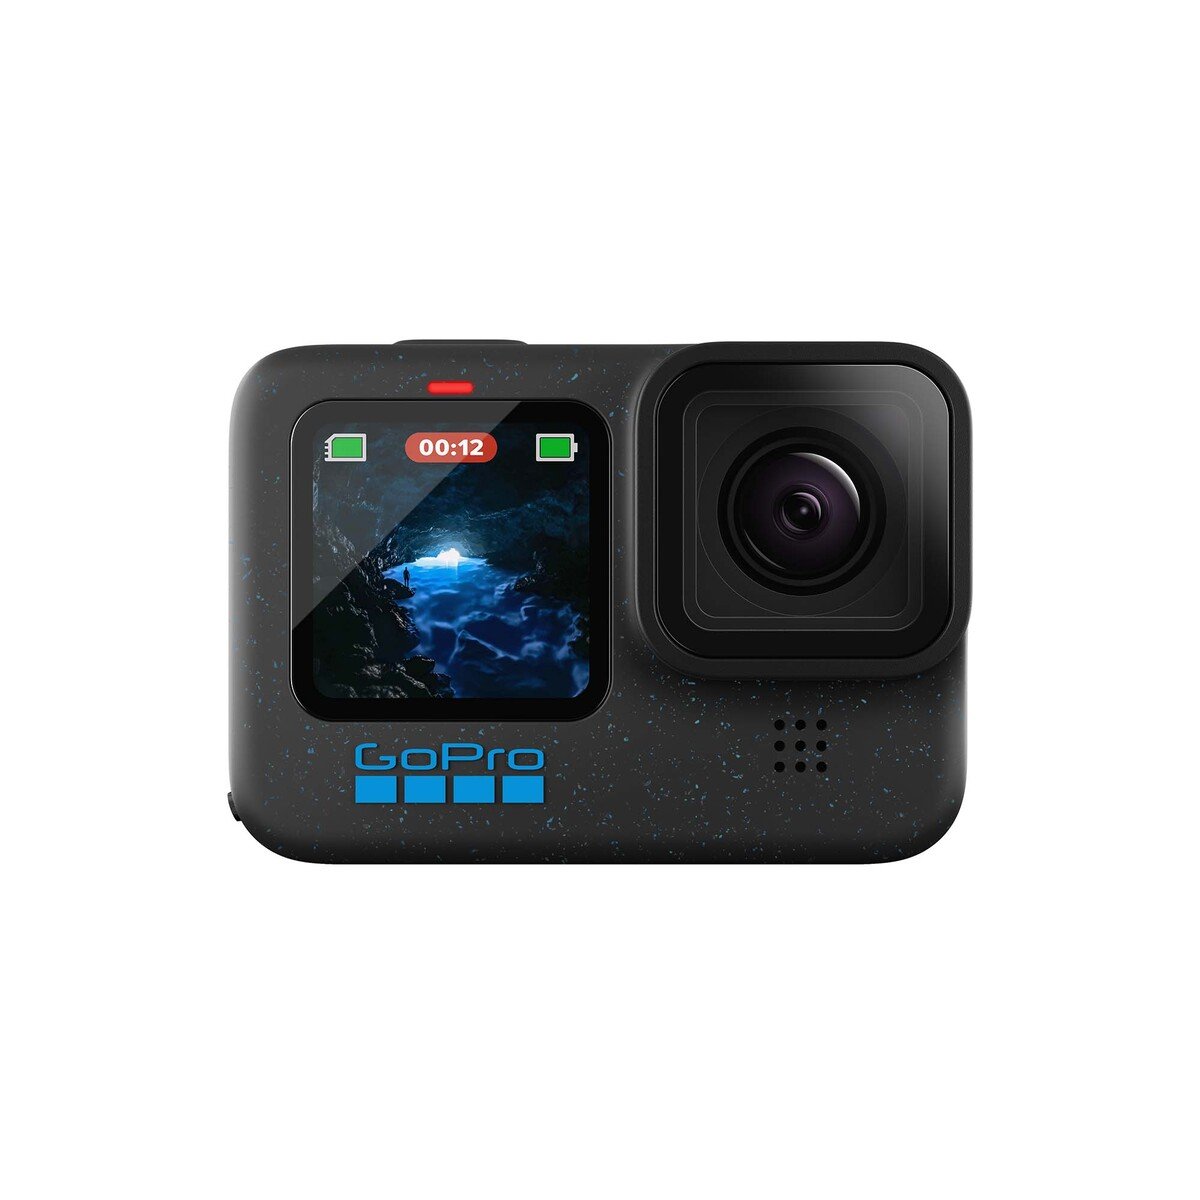 GoPro HERO12 Black Action Camera - CHDHX121RW